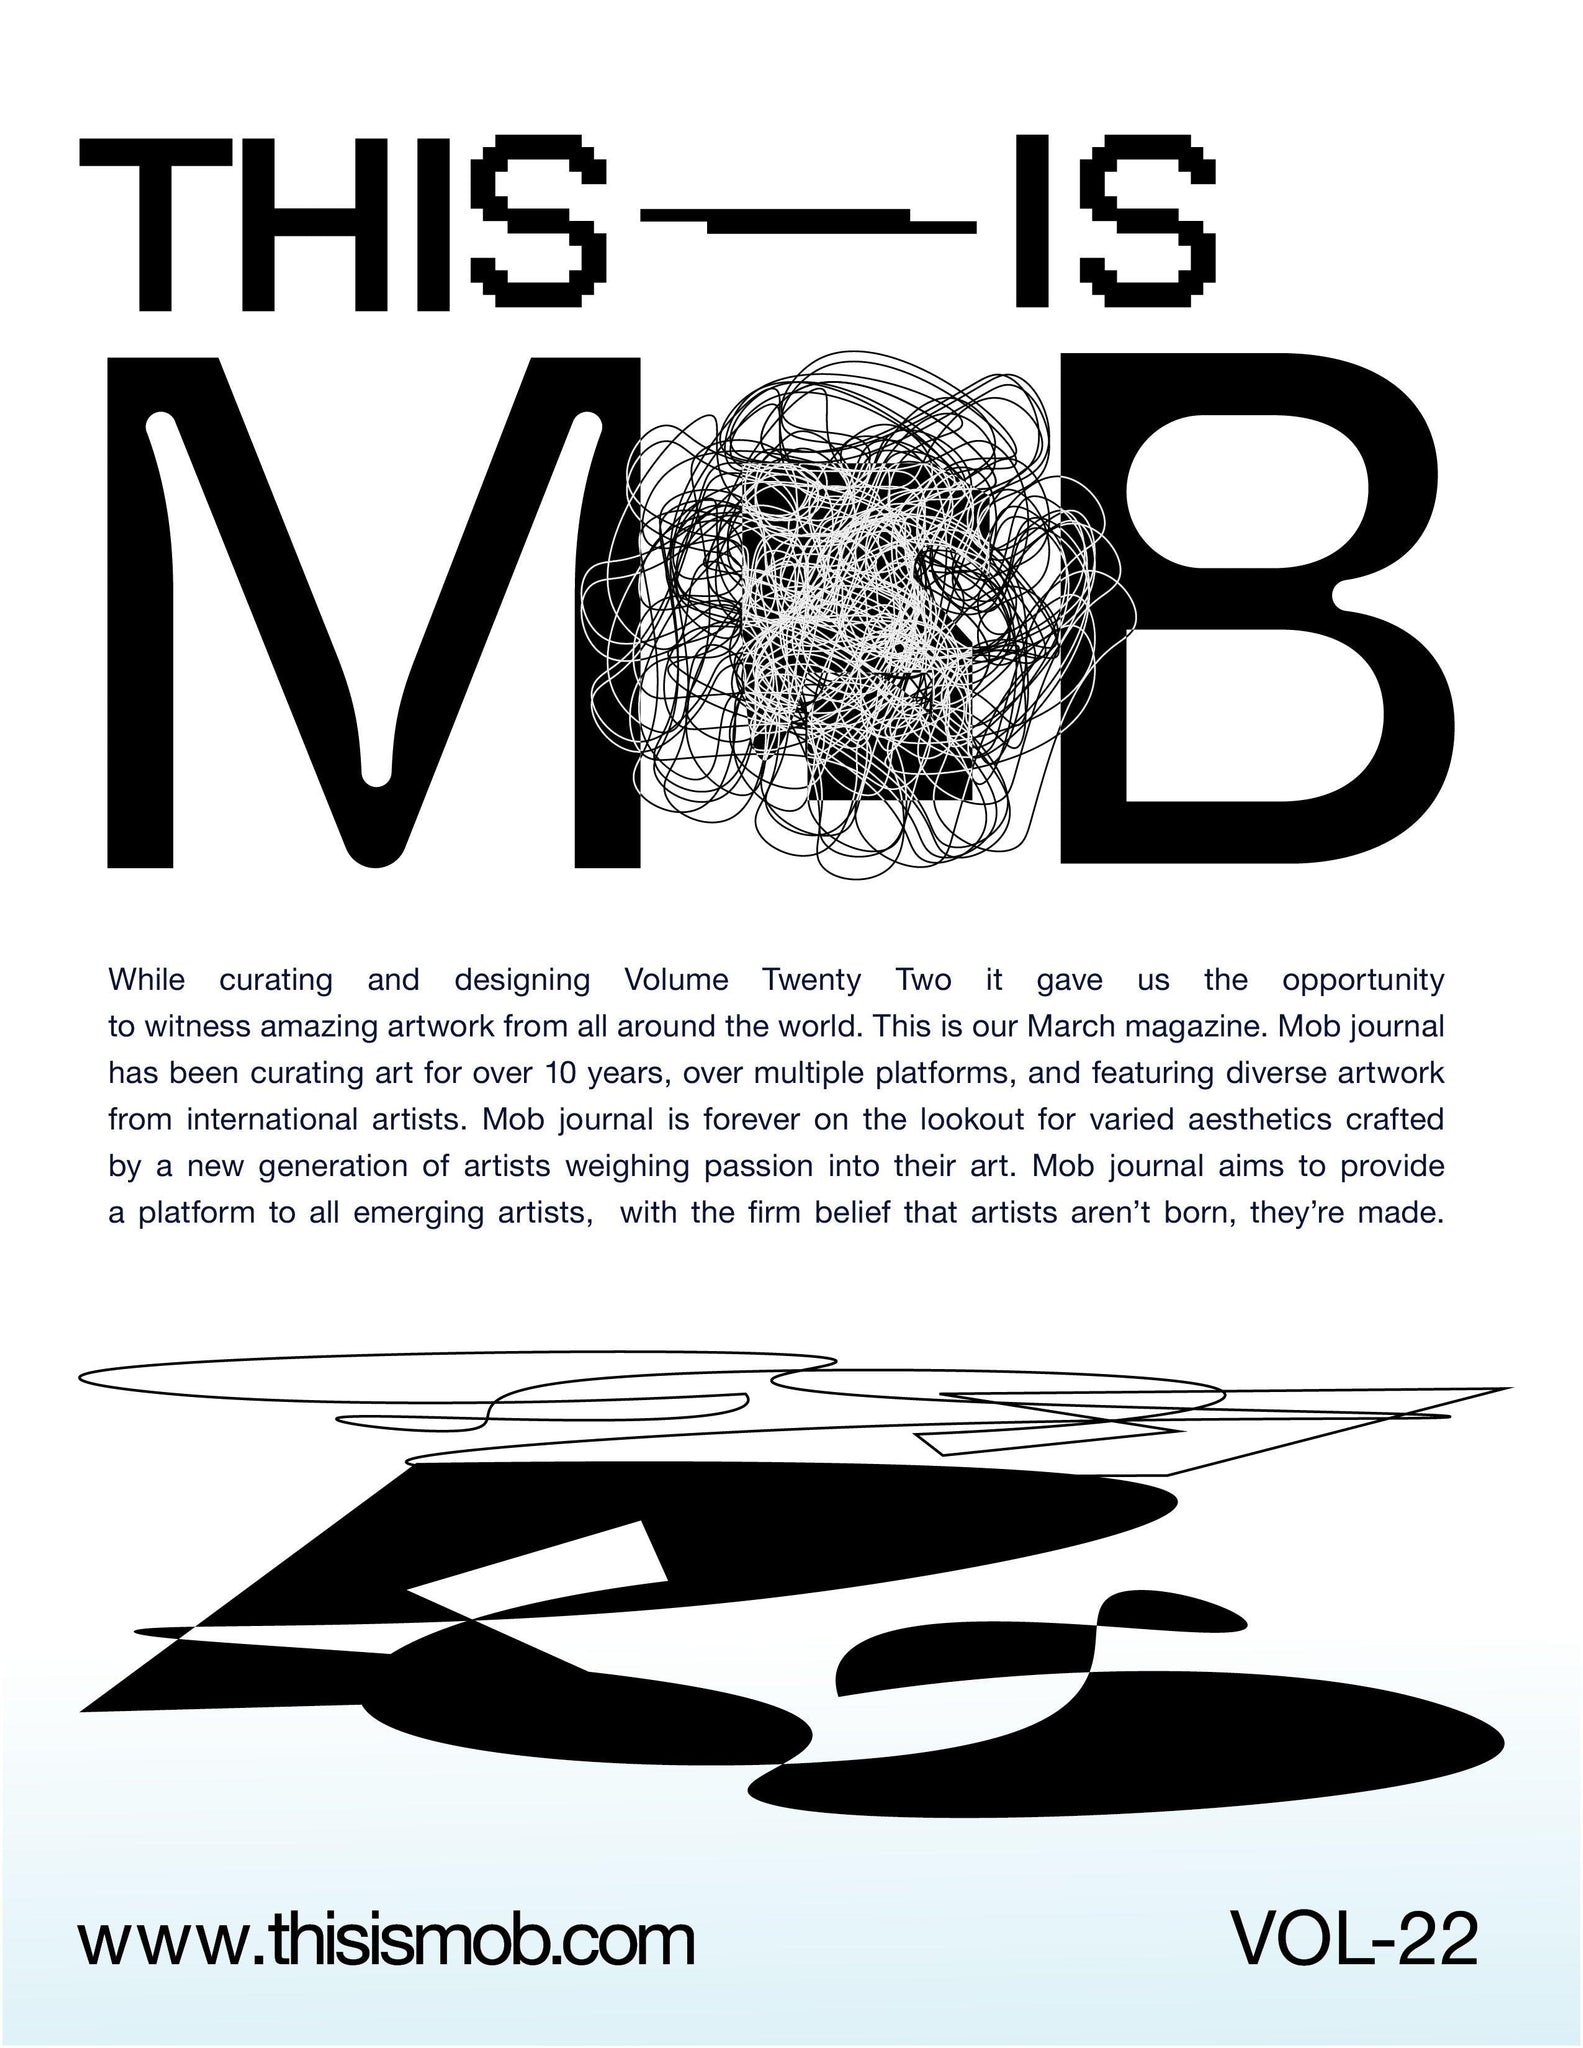 MOB JOURNAL | VOLUME TWENTY TWO | ISSUE #22 - Mob Journal